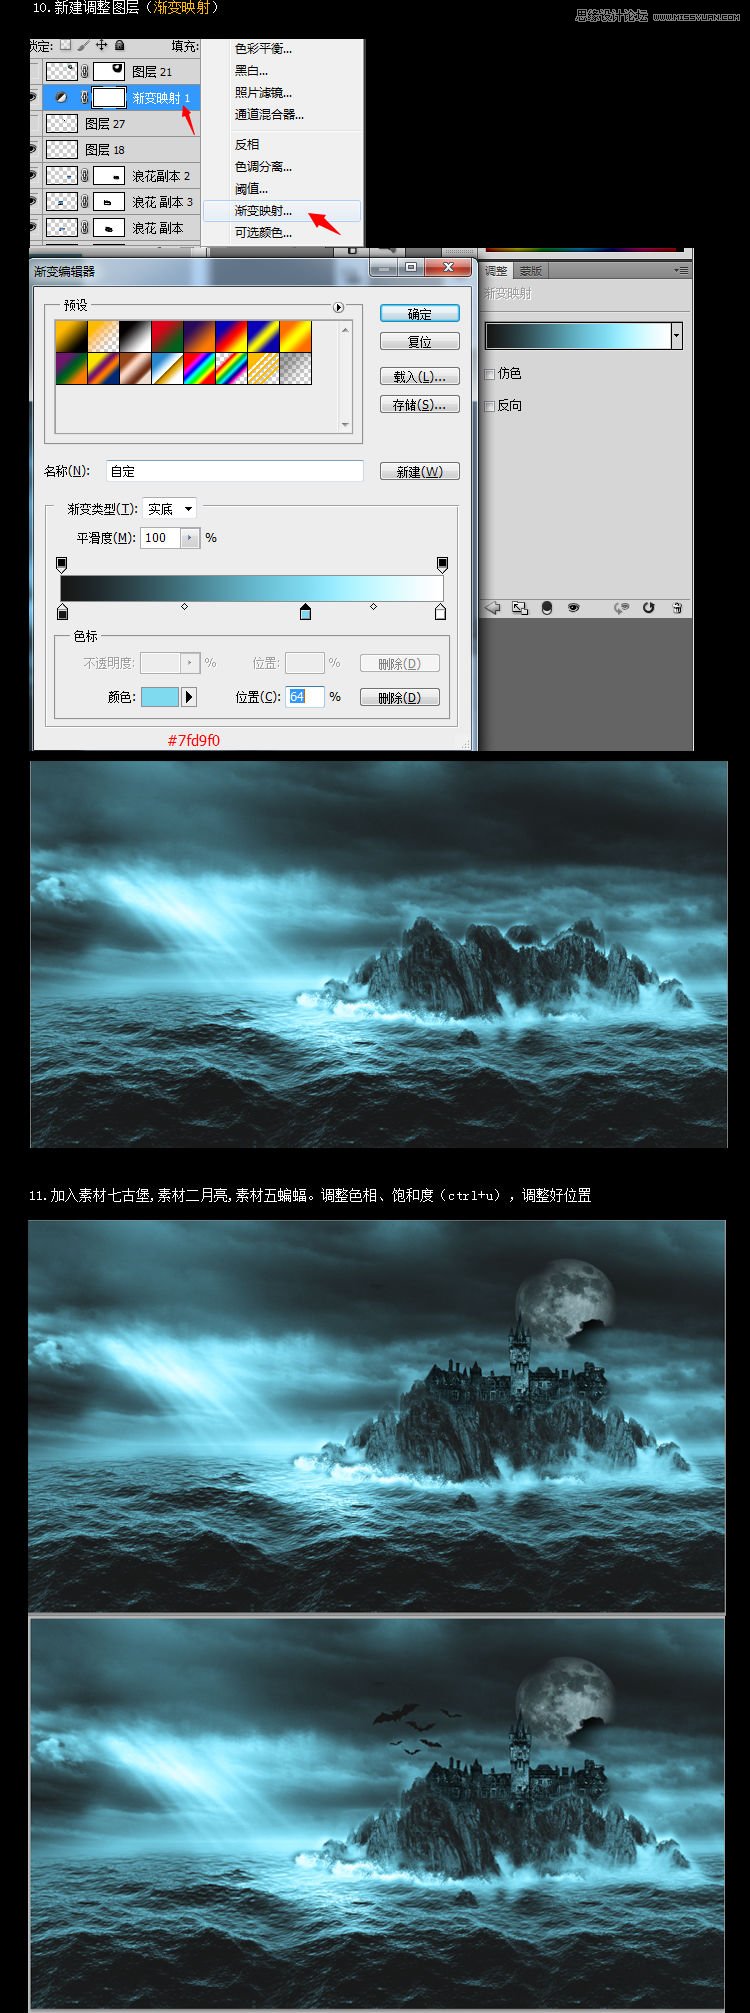 Photoshop合成恐怖氛围的海中孤岛场景5